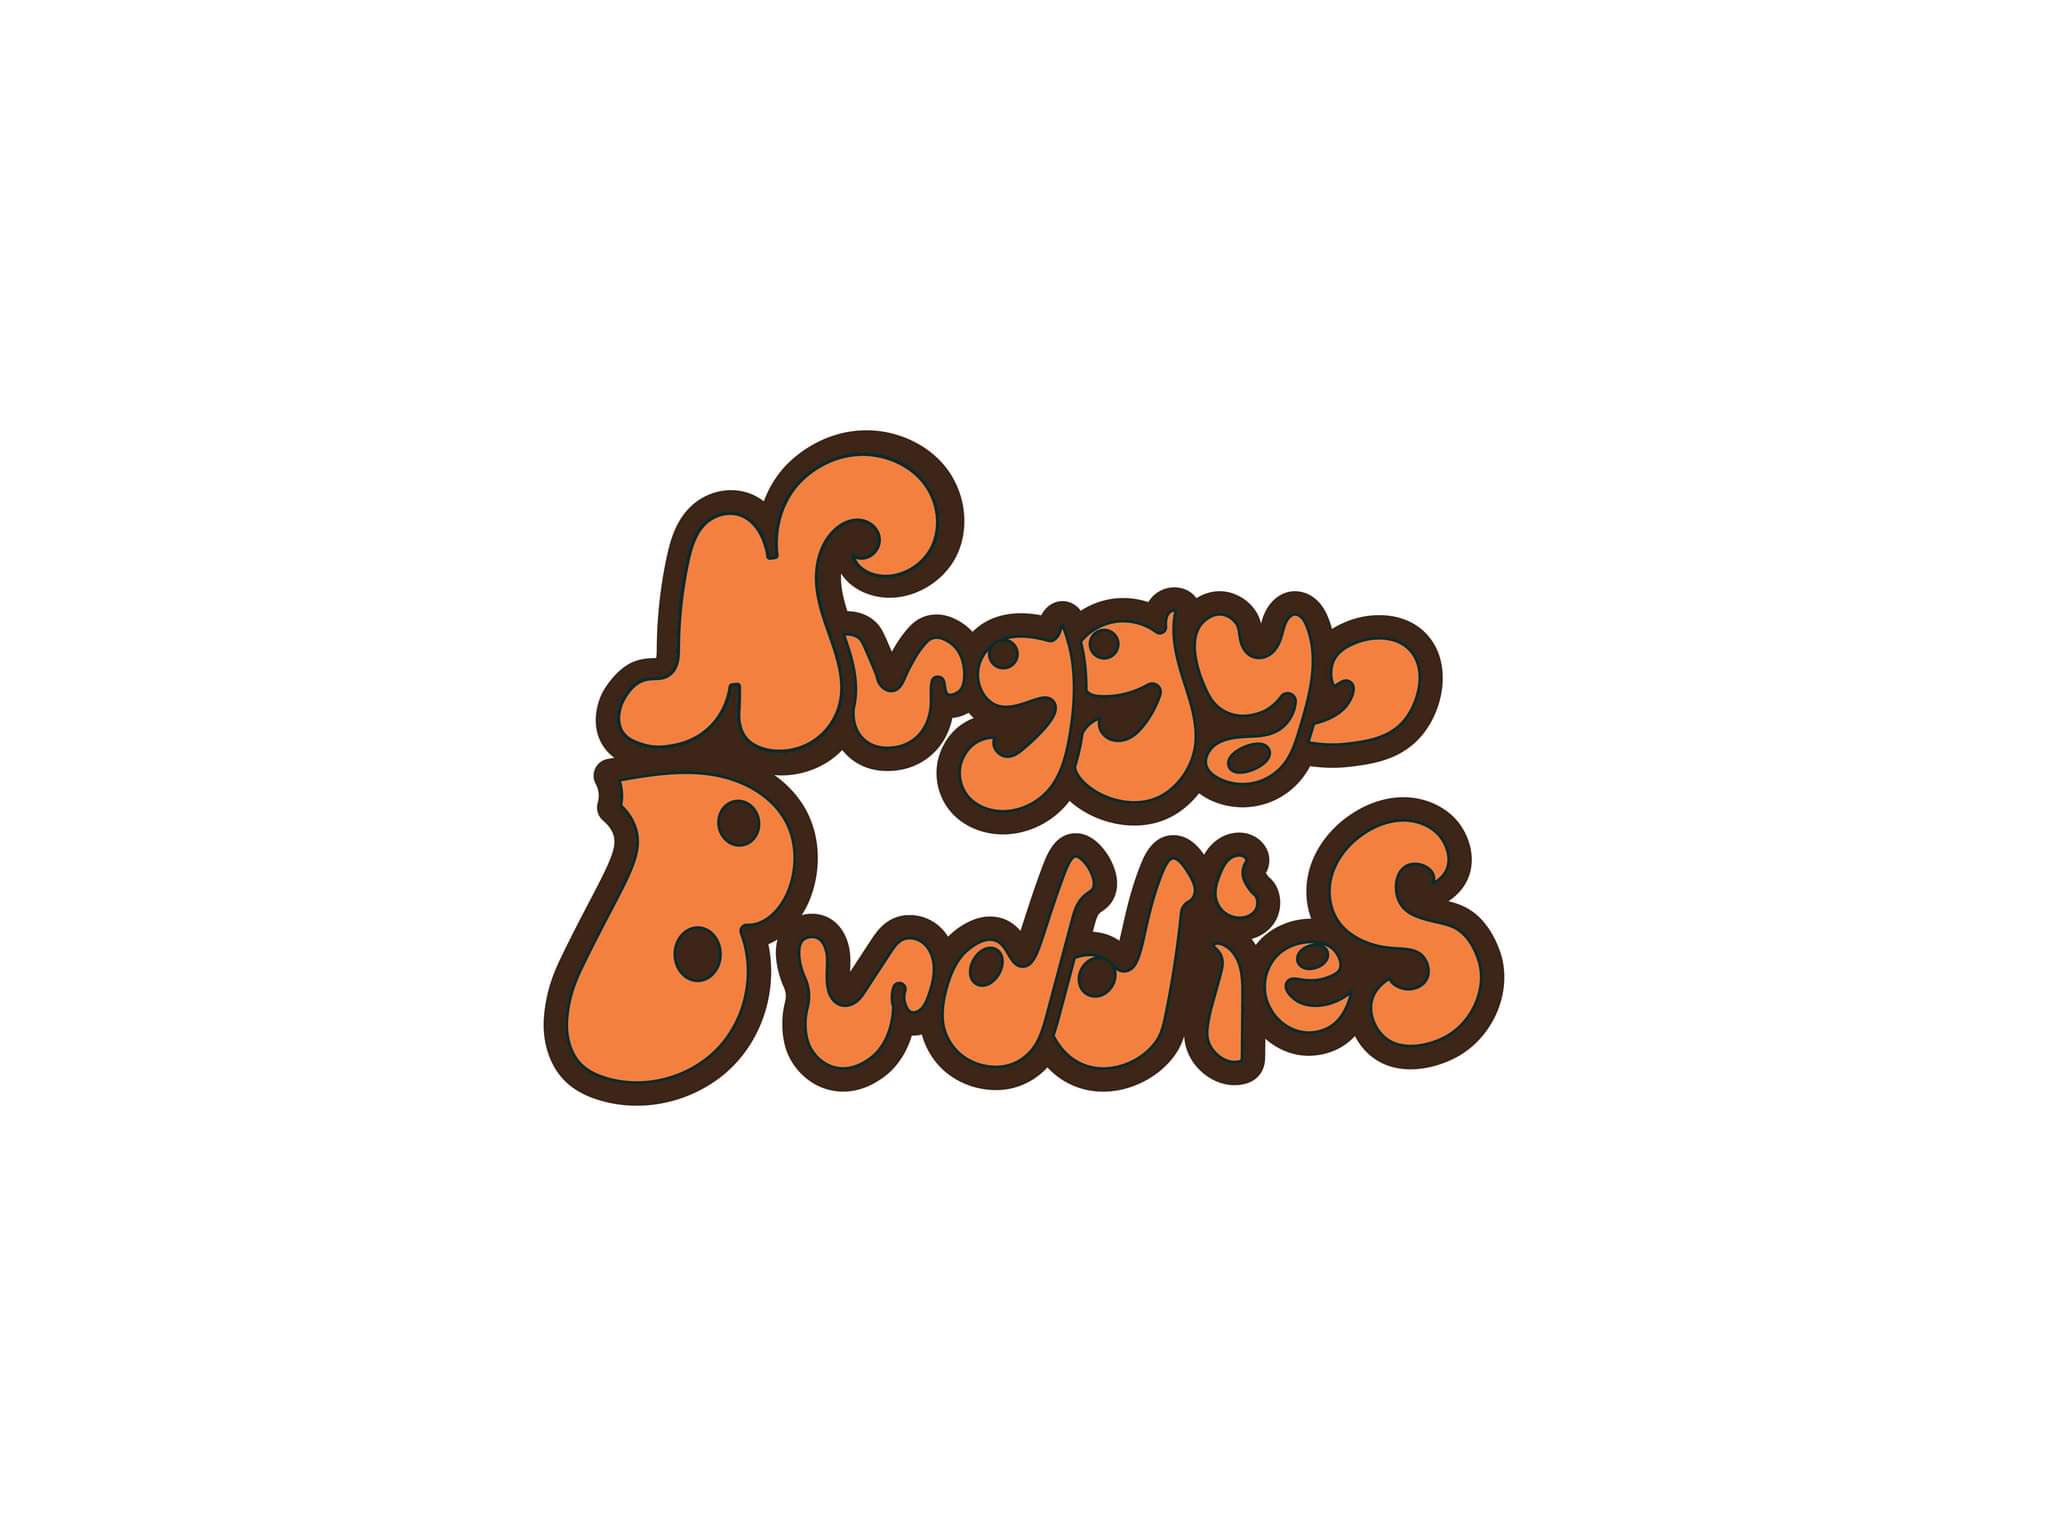 Nuggy_Buddies